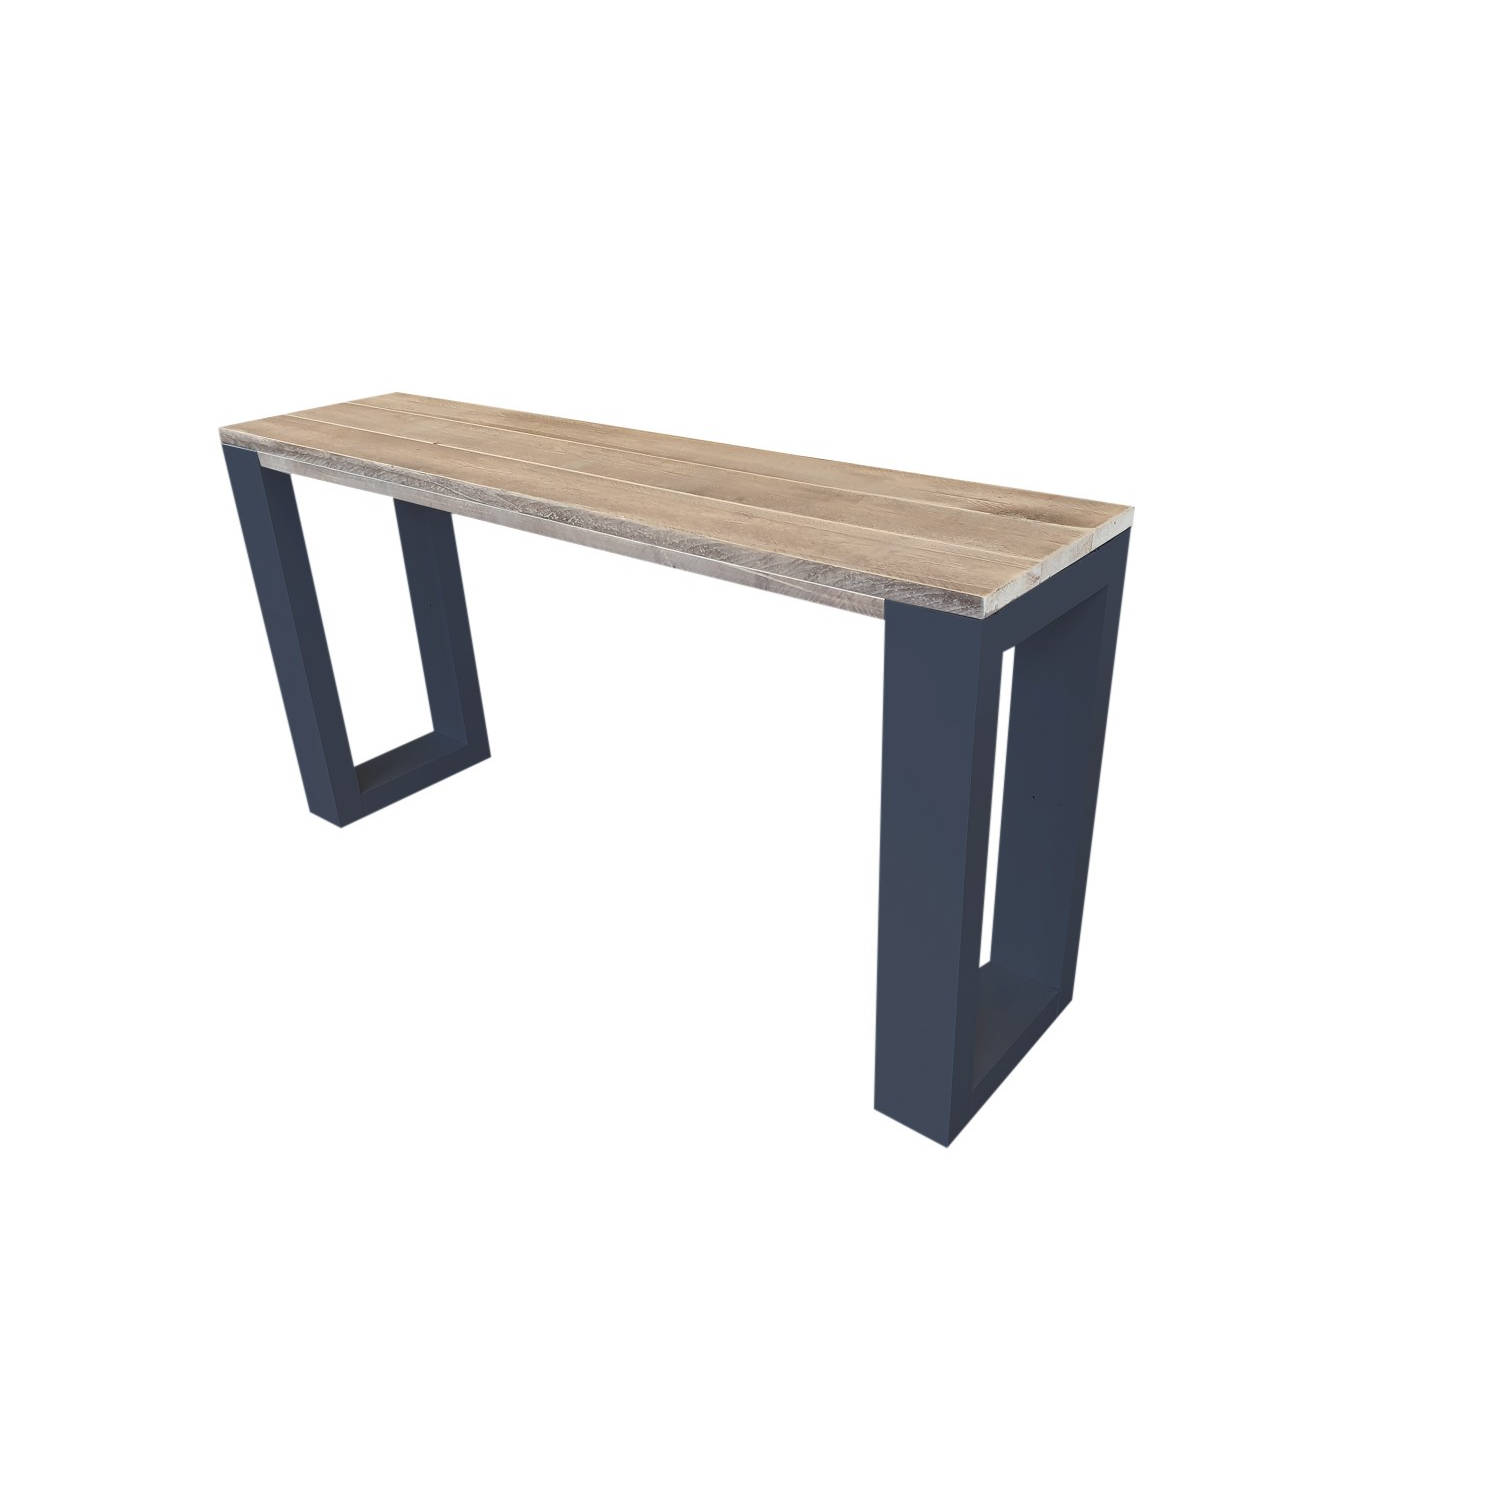 Wood4you - Side table enkel steigerhout - 160 cm